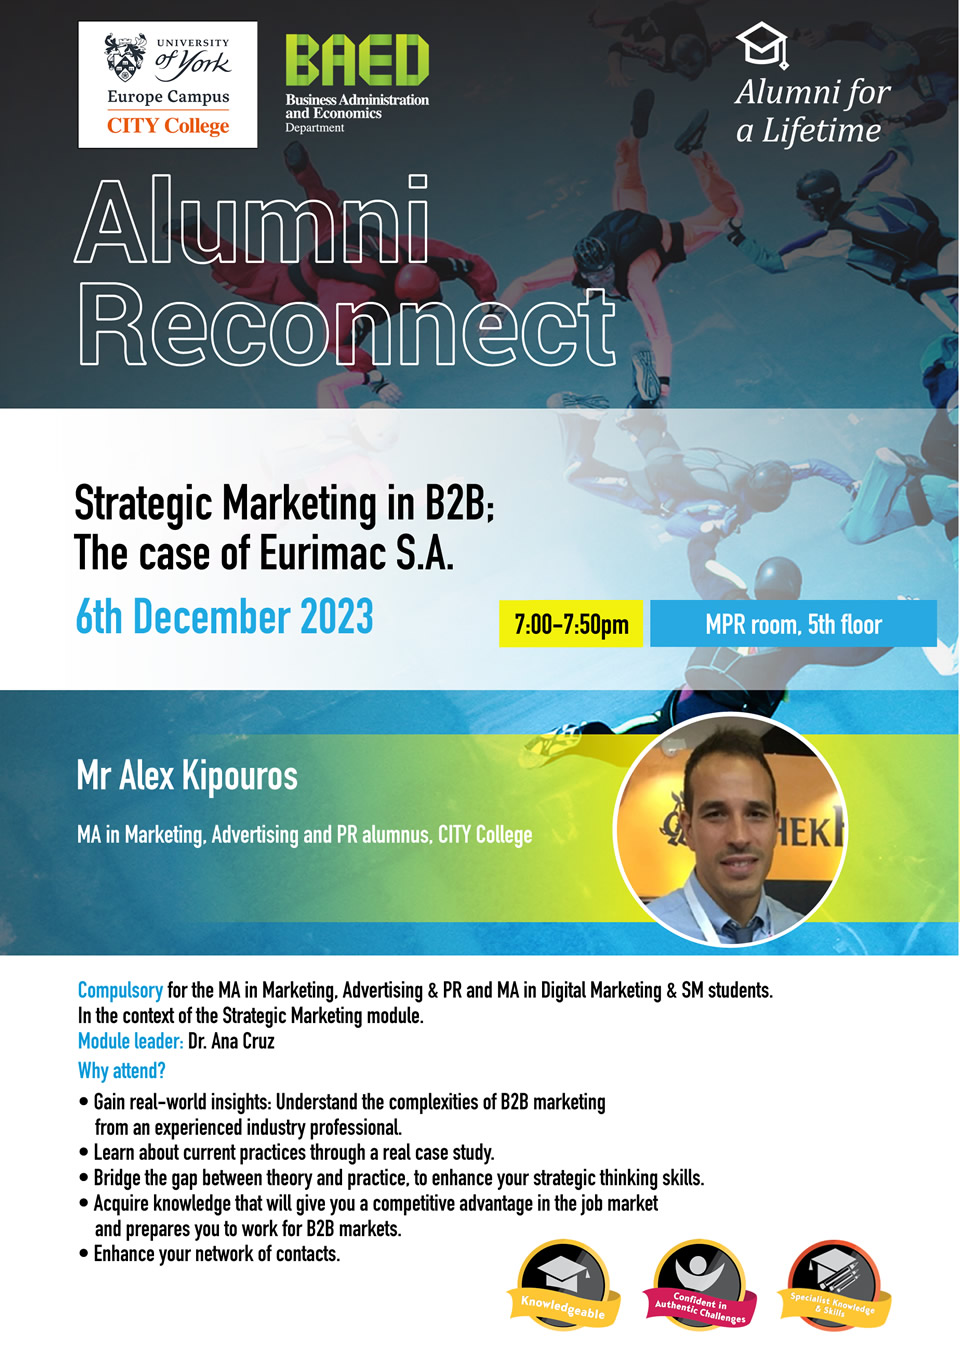 Alumni Reconnect talk by Mr Alex Kipouros